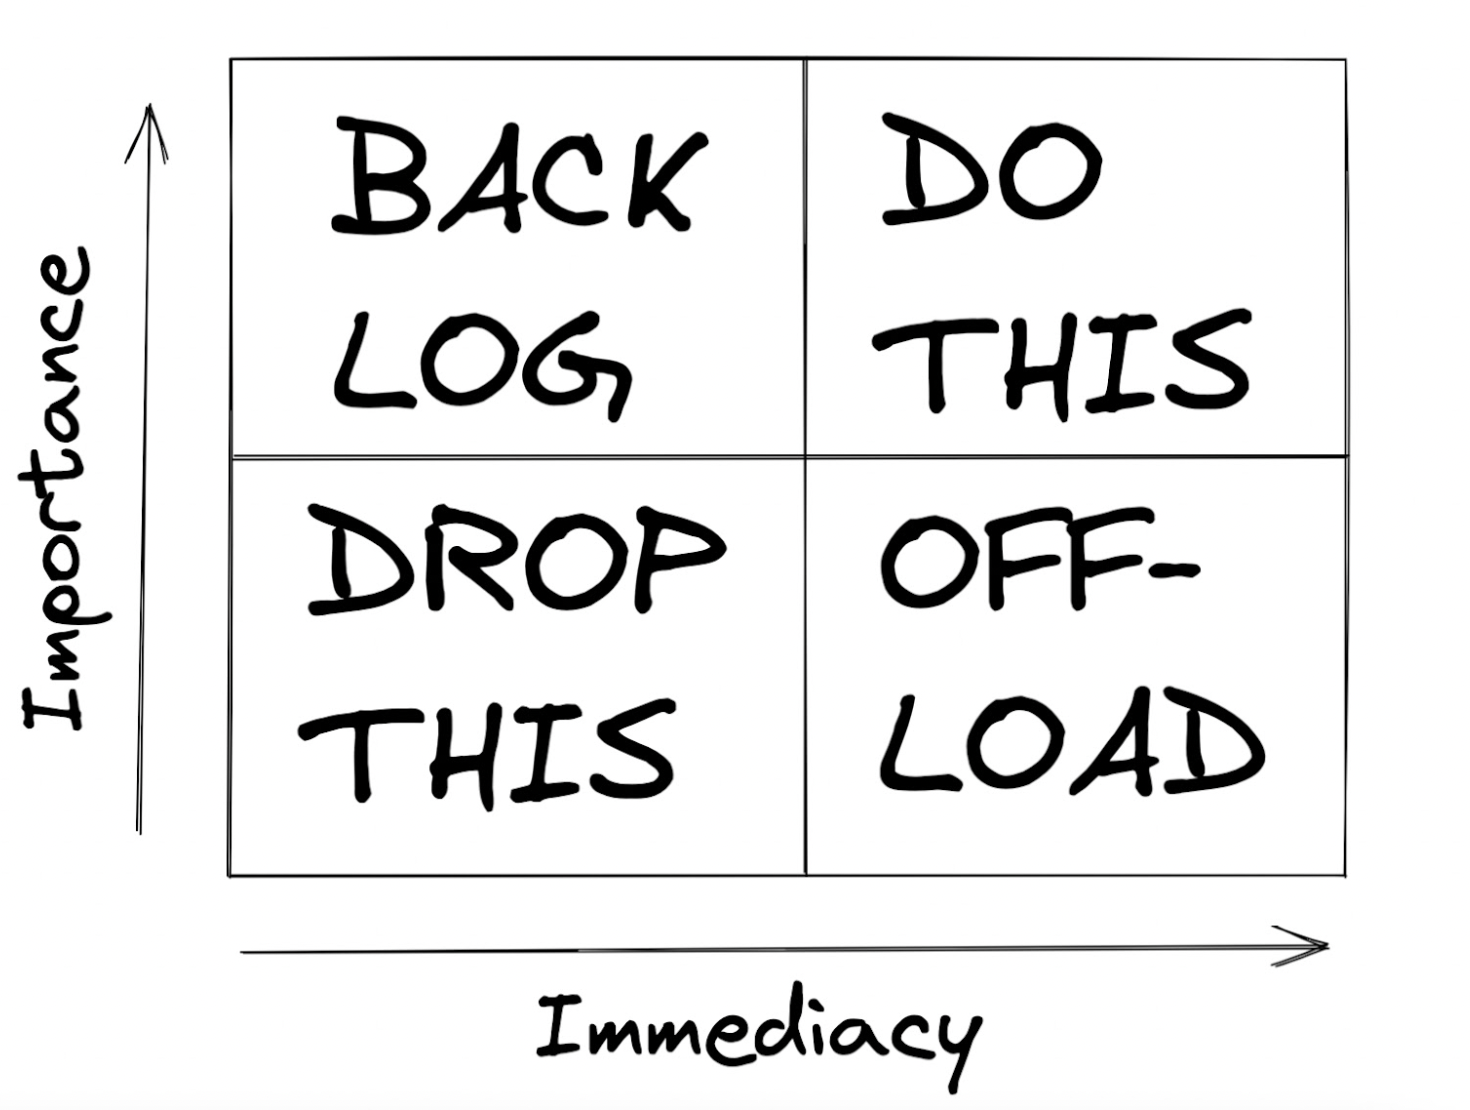 Figure 1. Importance vs. immediacy